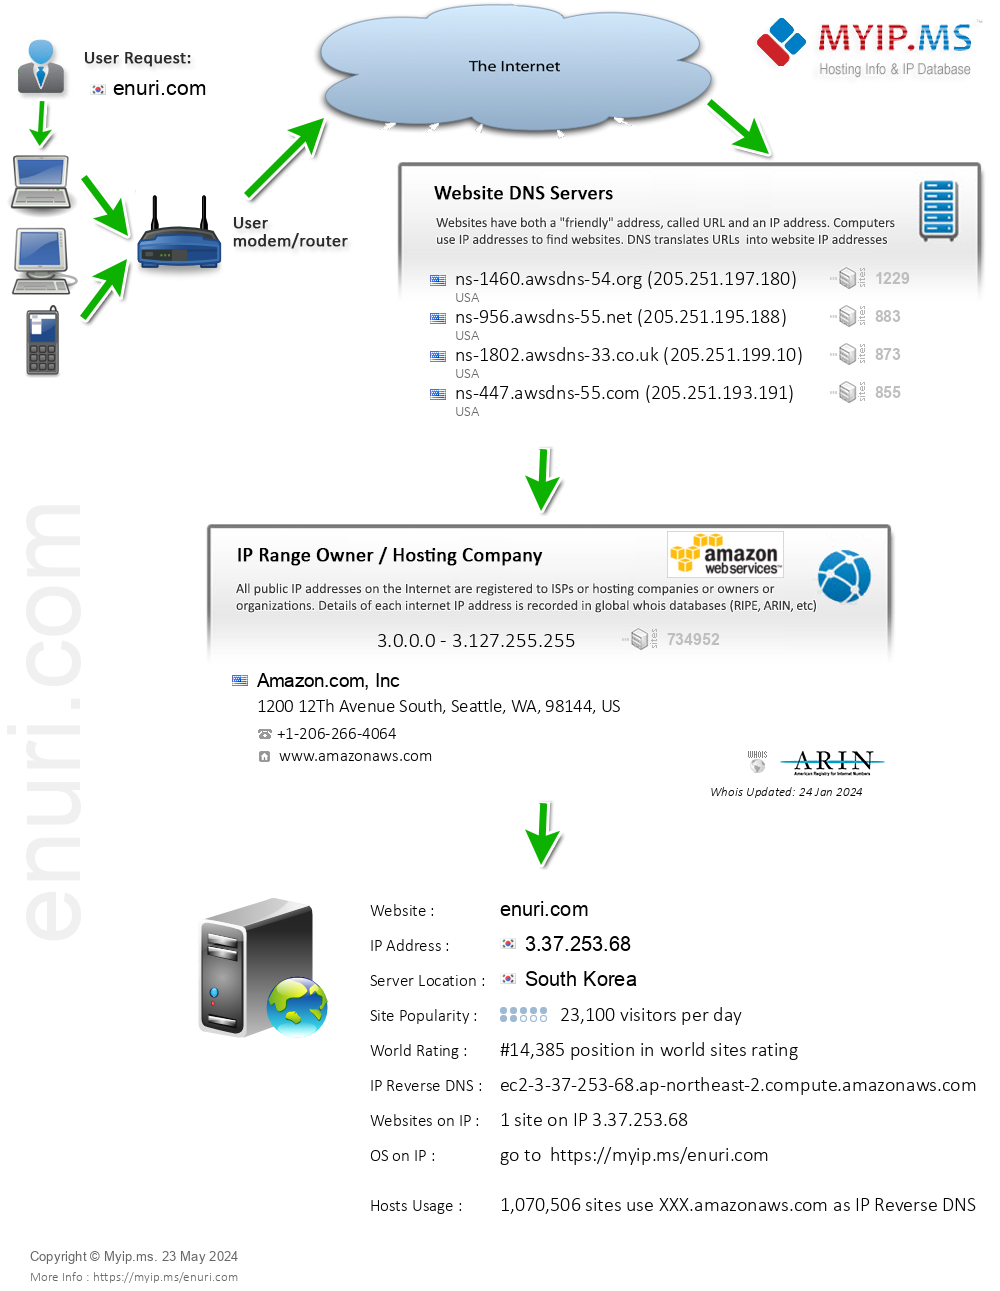 Enuri.com - Website Hosting Visual IP Diagram